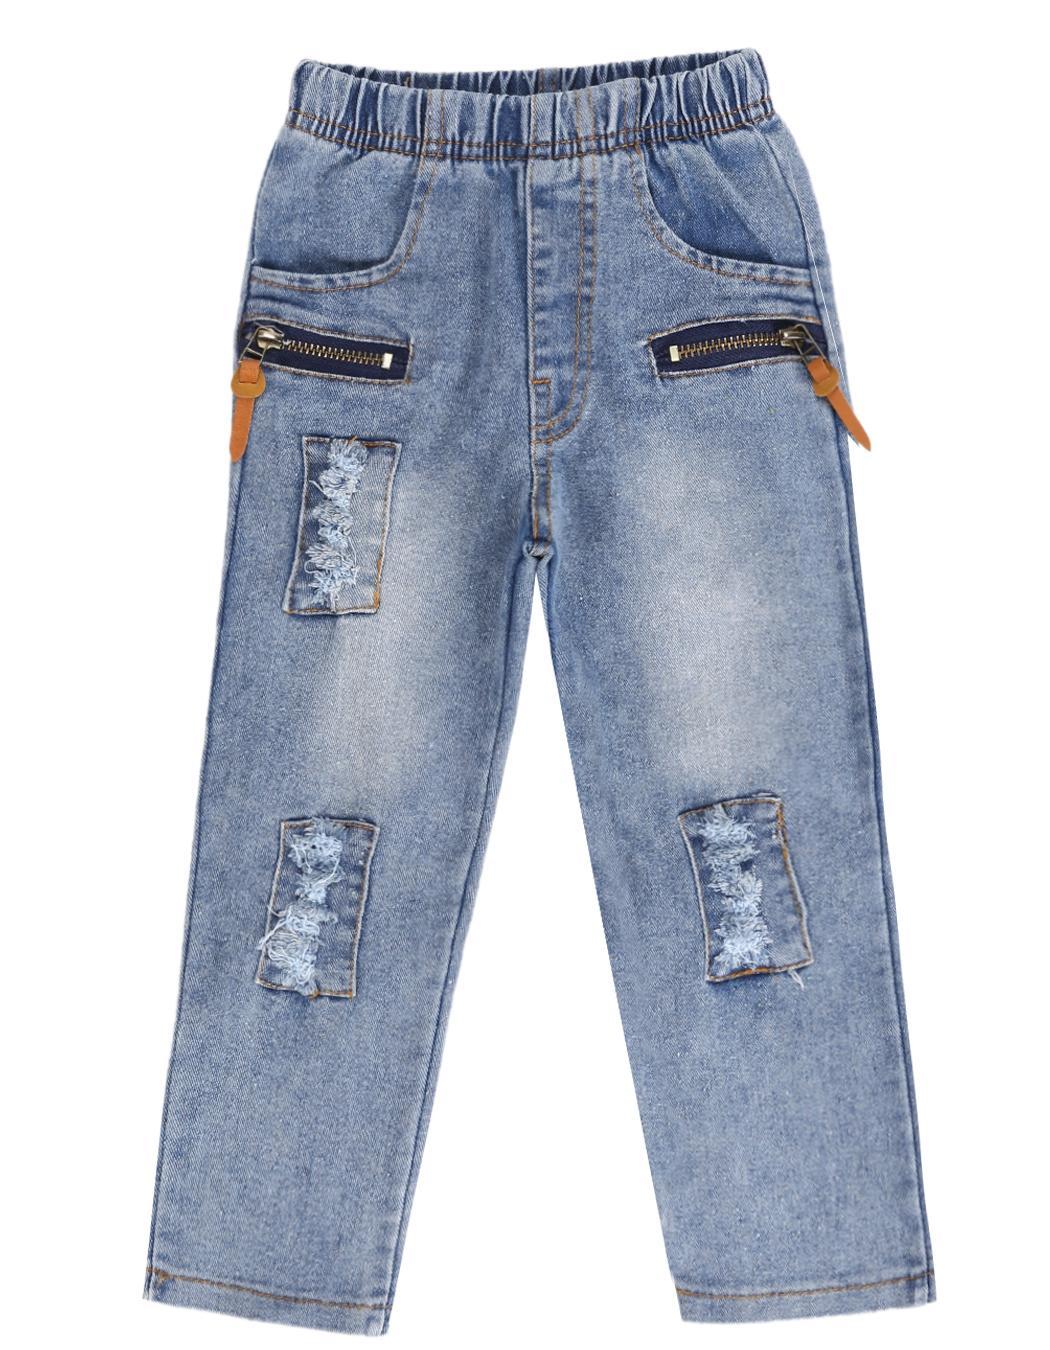 New Fashion Kids Children Boys Elastic Waist Jeans Denim Pants EH7E | eBay